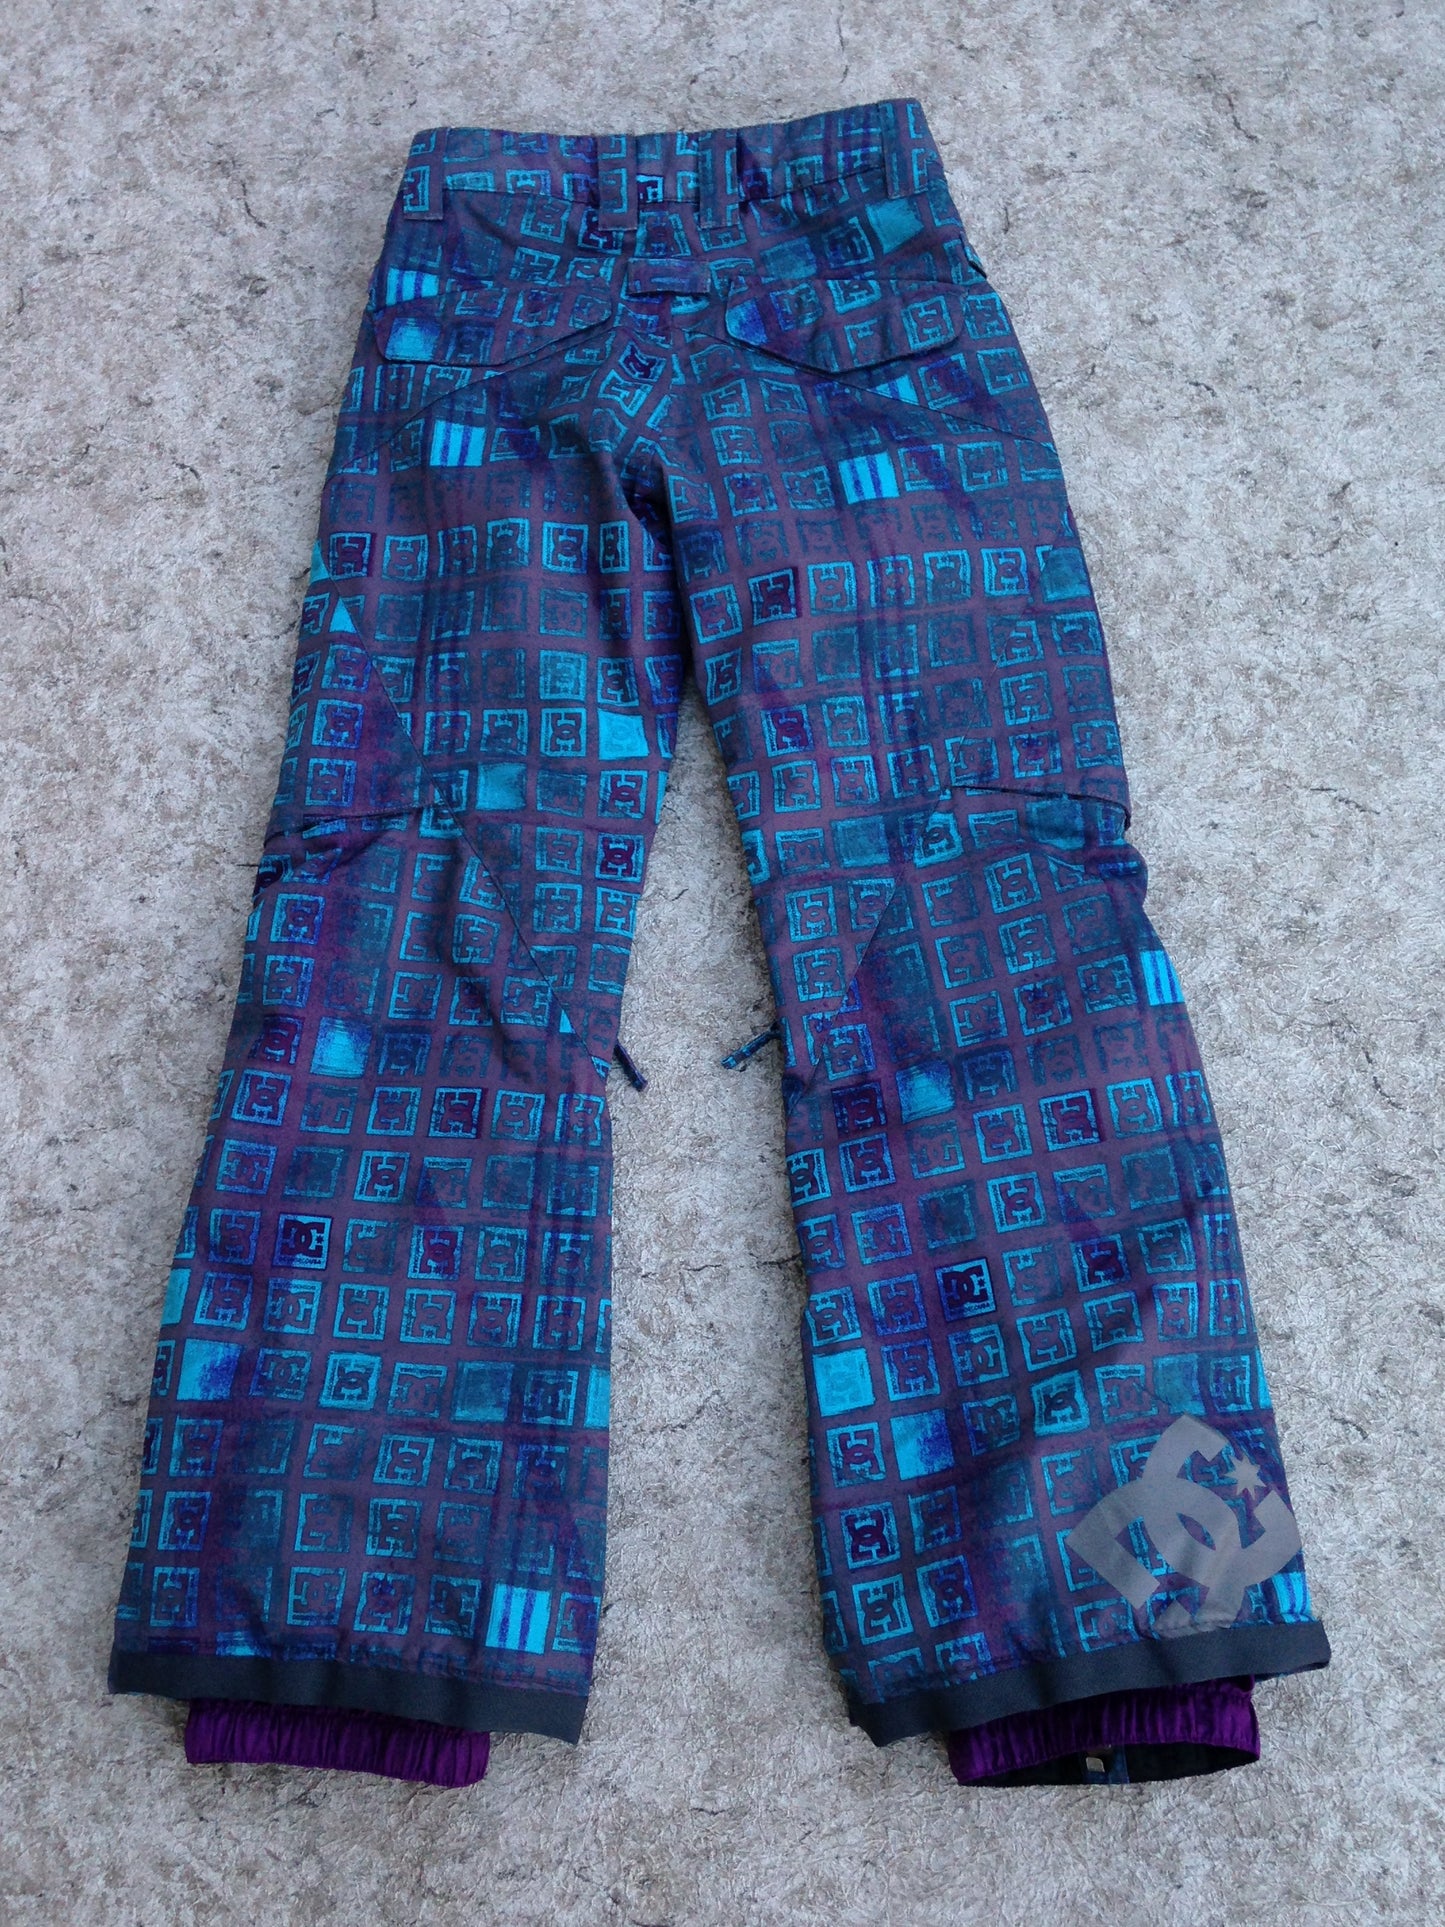 Snow Pants Child Size 10-12 DC Blue Grey Purple Snowboarding Adjustable Waist New Demo Model